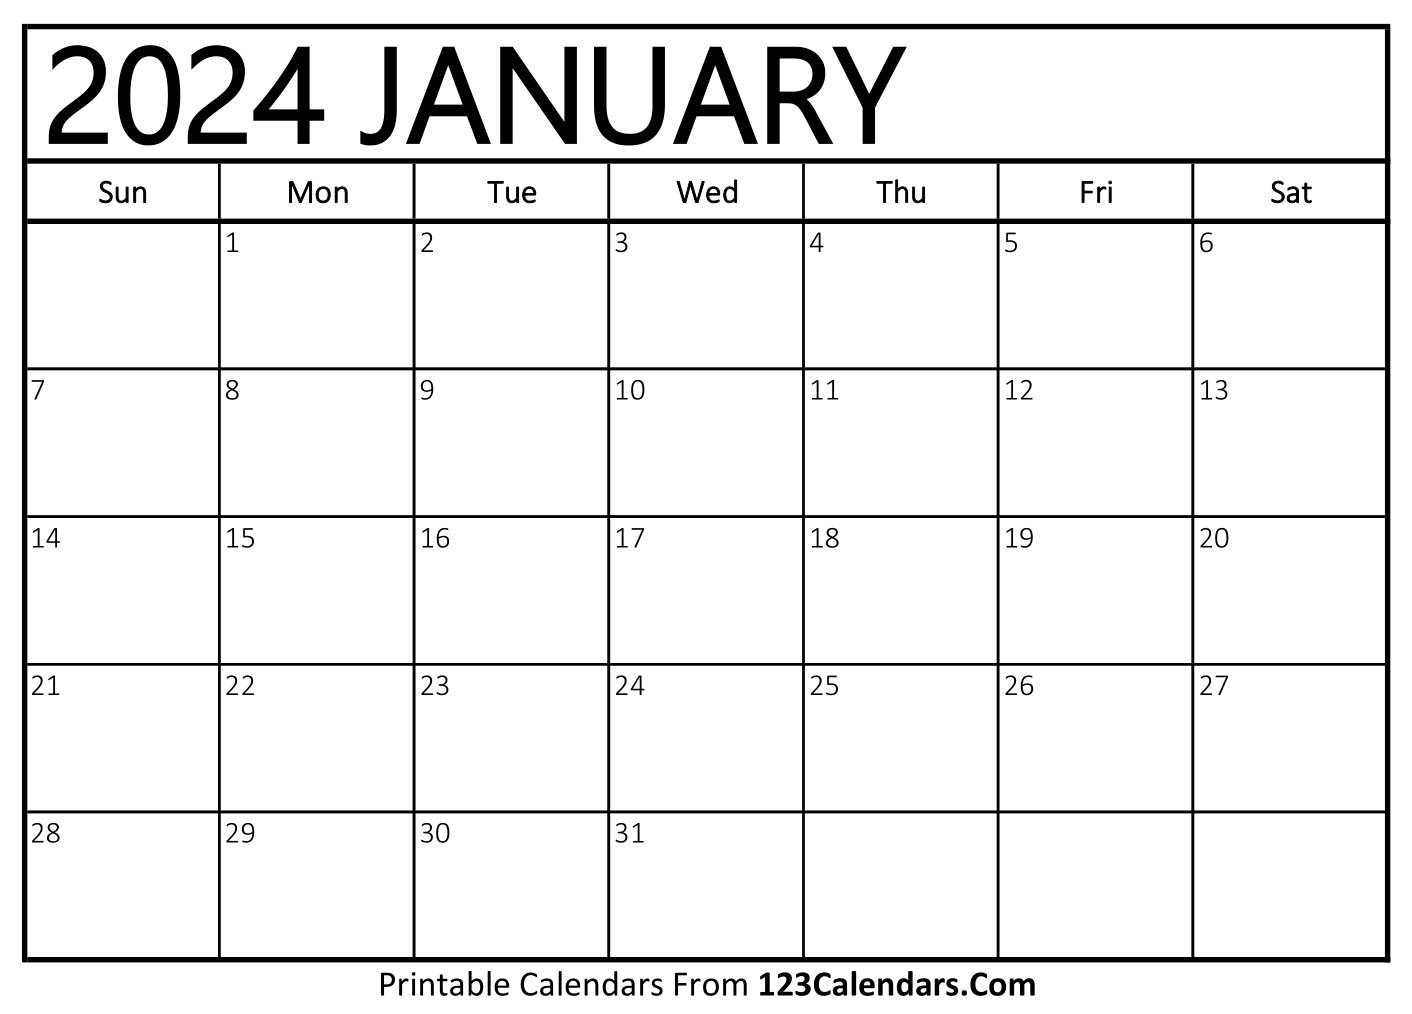 Printable January 2024 Calendar Templates - 123Calendars | Google Printable Calendar 2024